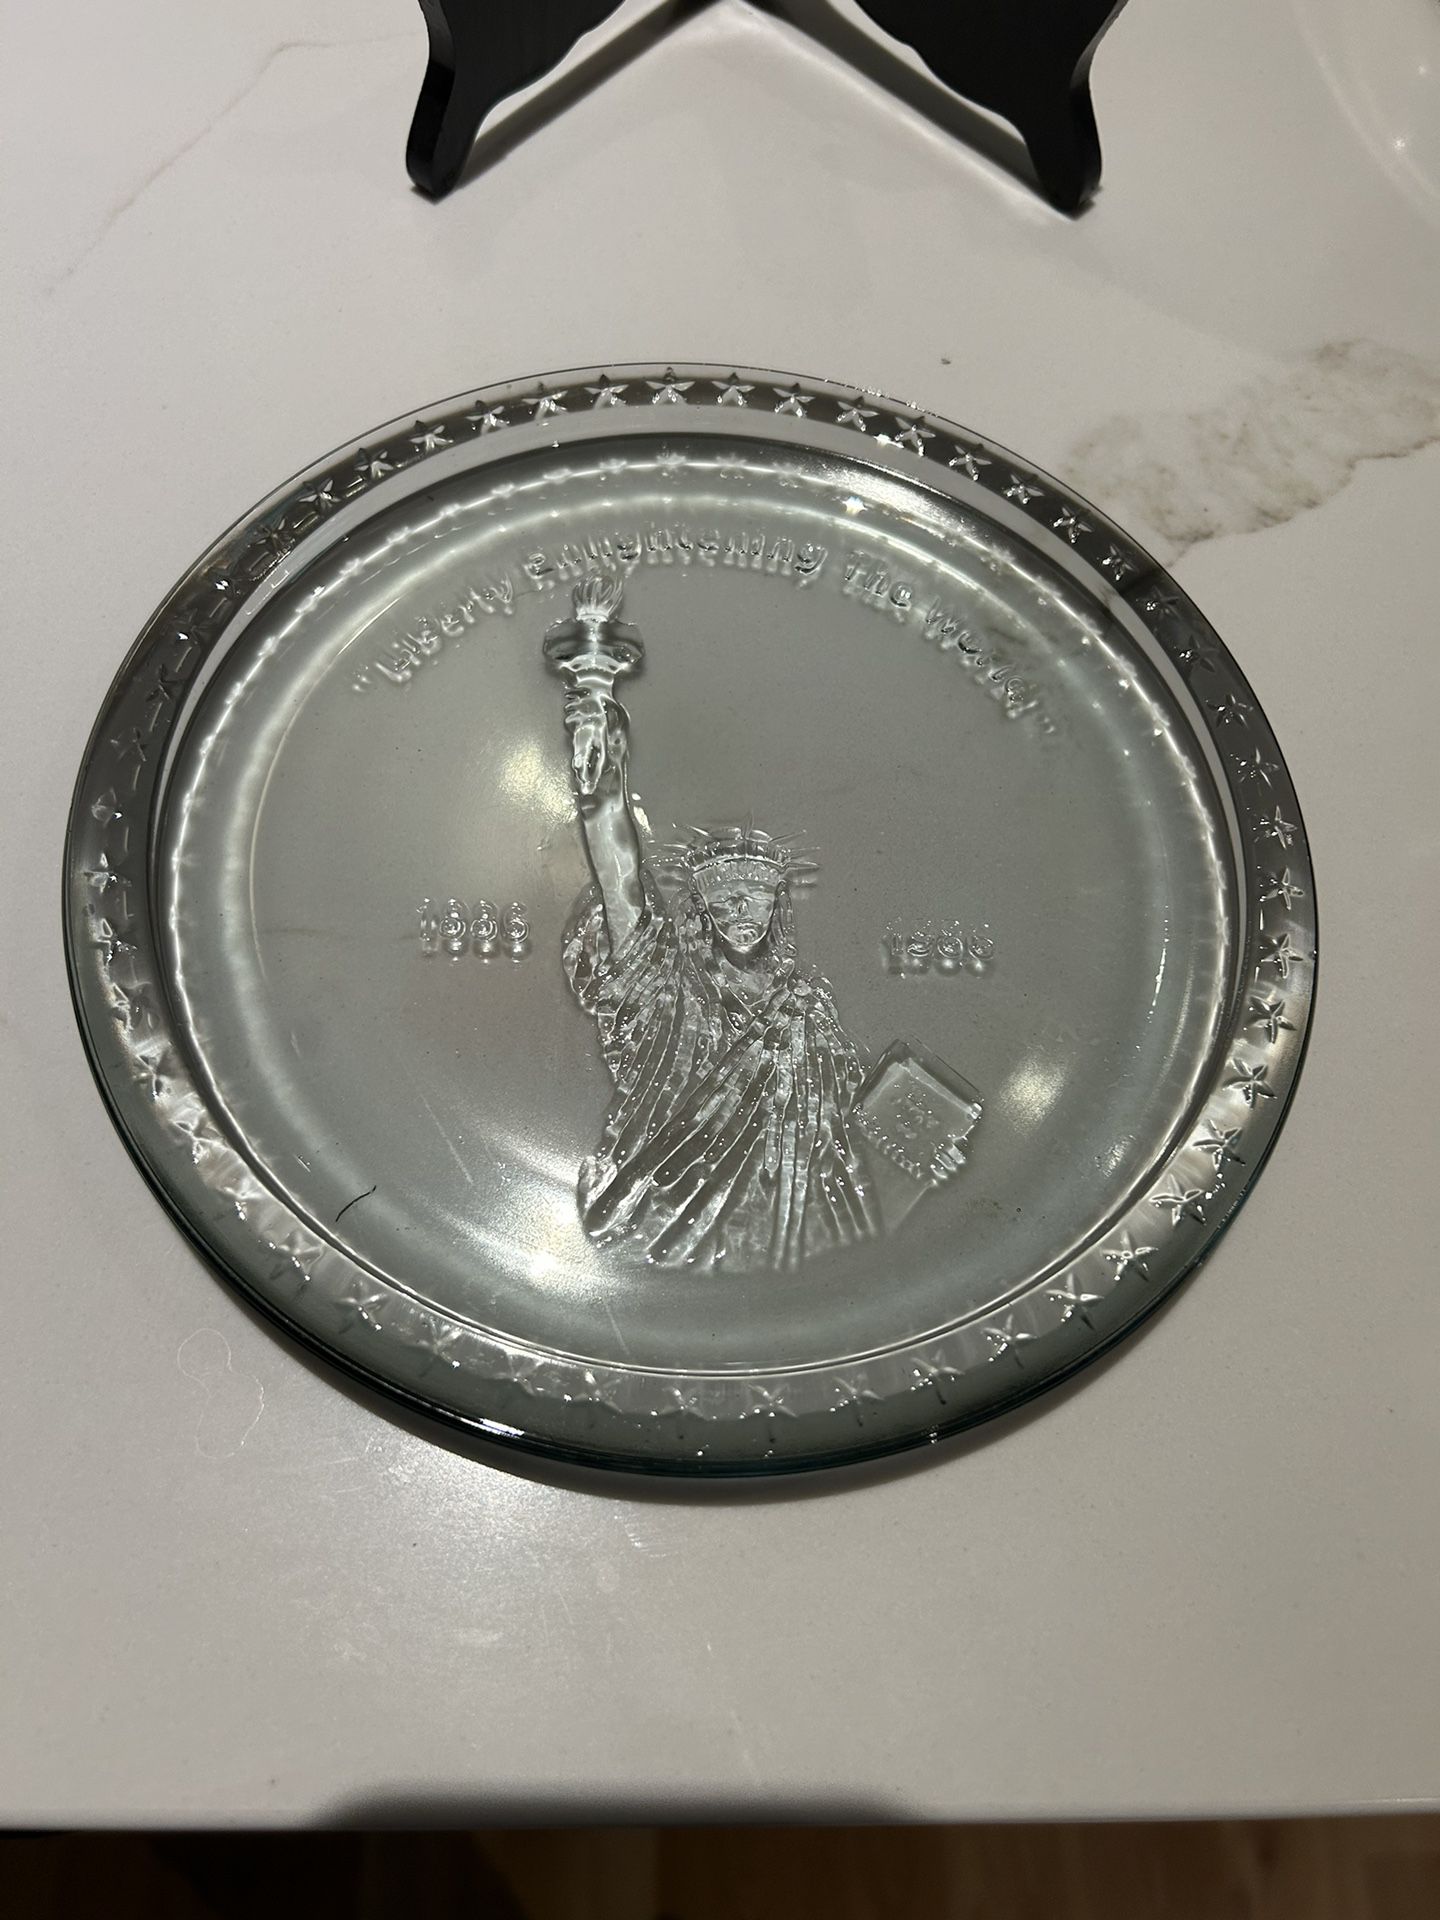 Glass Statue Of Liberty Plate